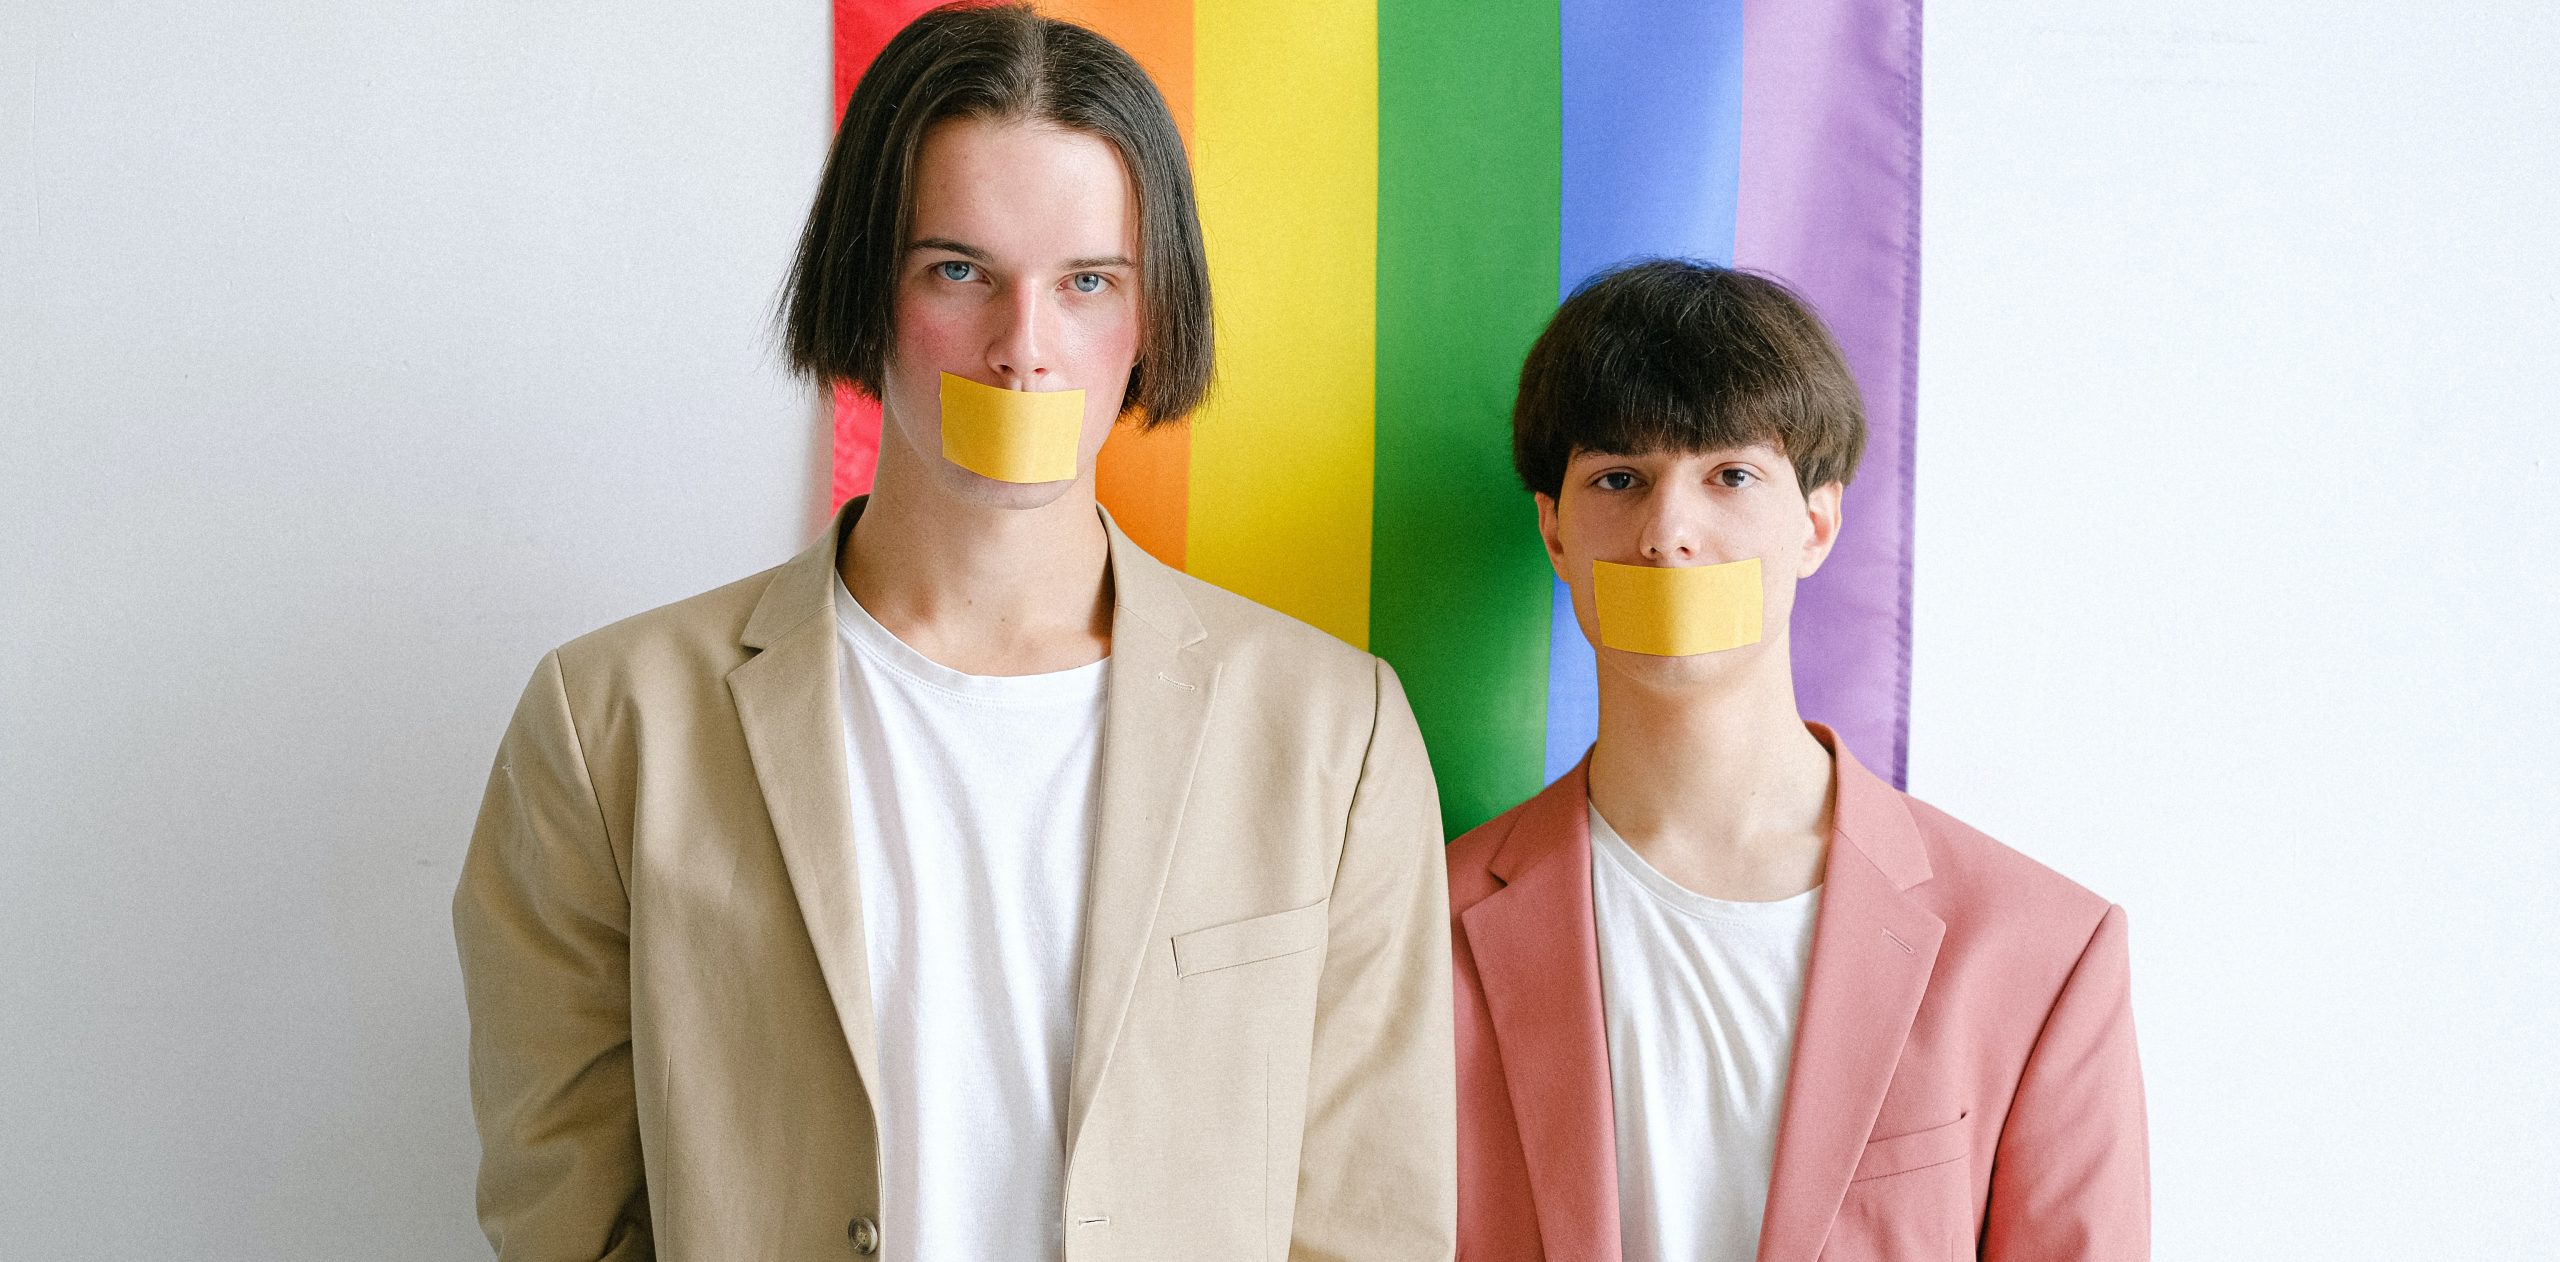 геи лесбиянки дети фото 103